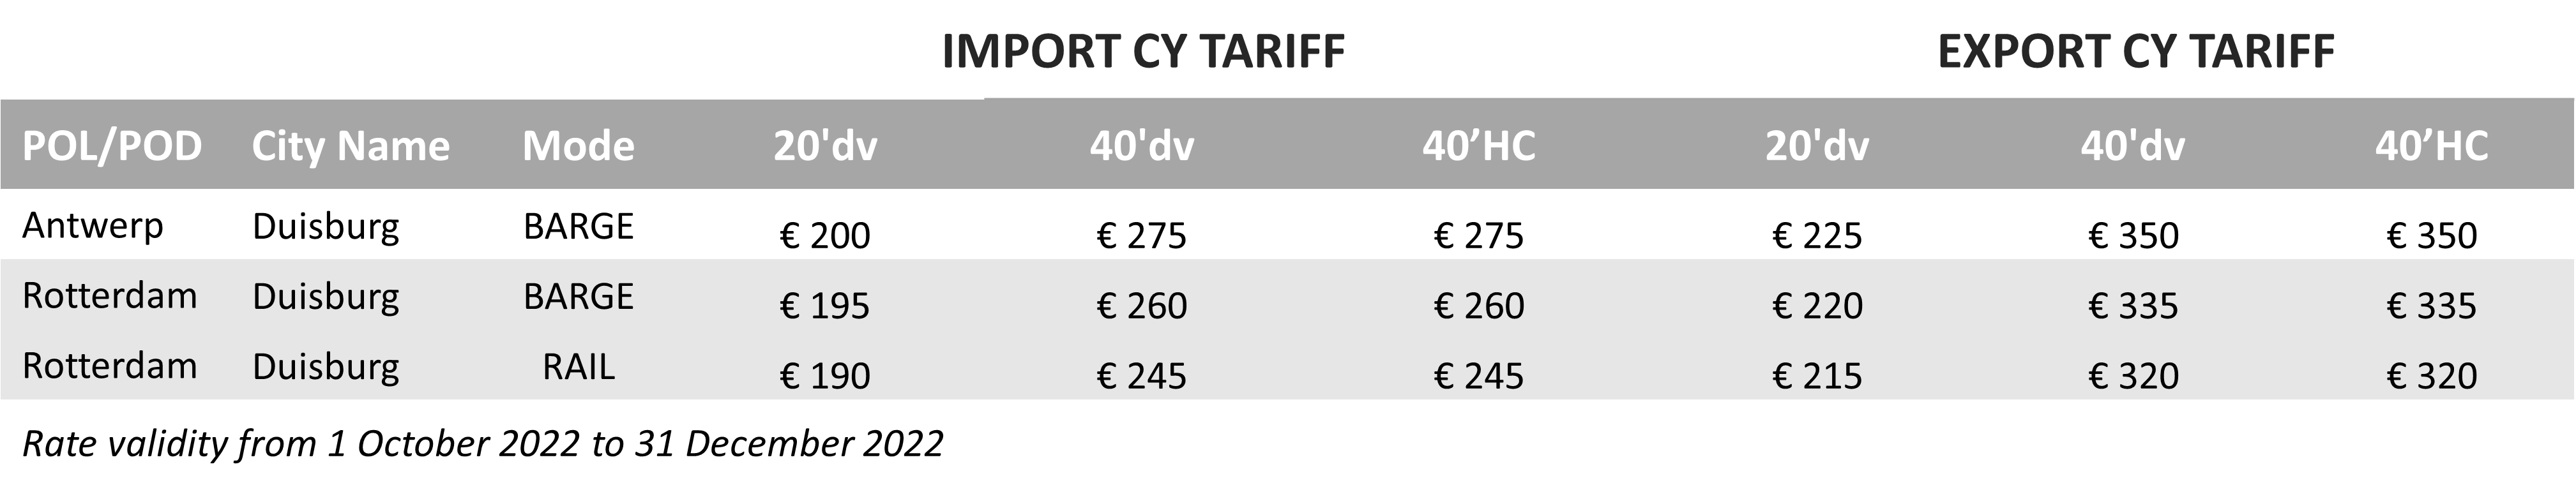 CY Tariff - 2022Q4 - DE (West ports)